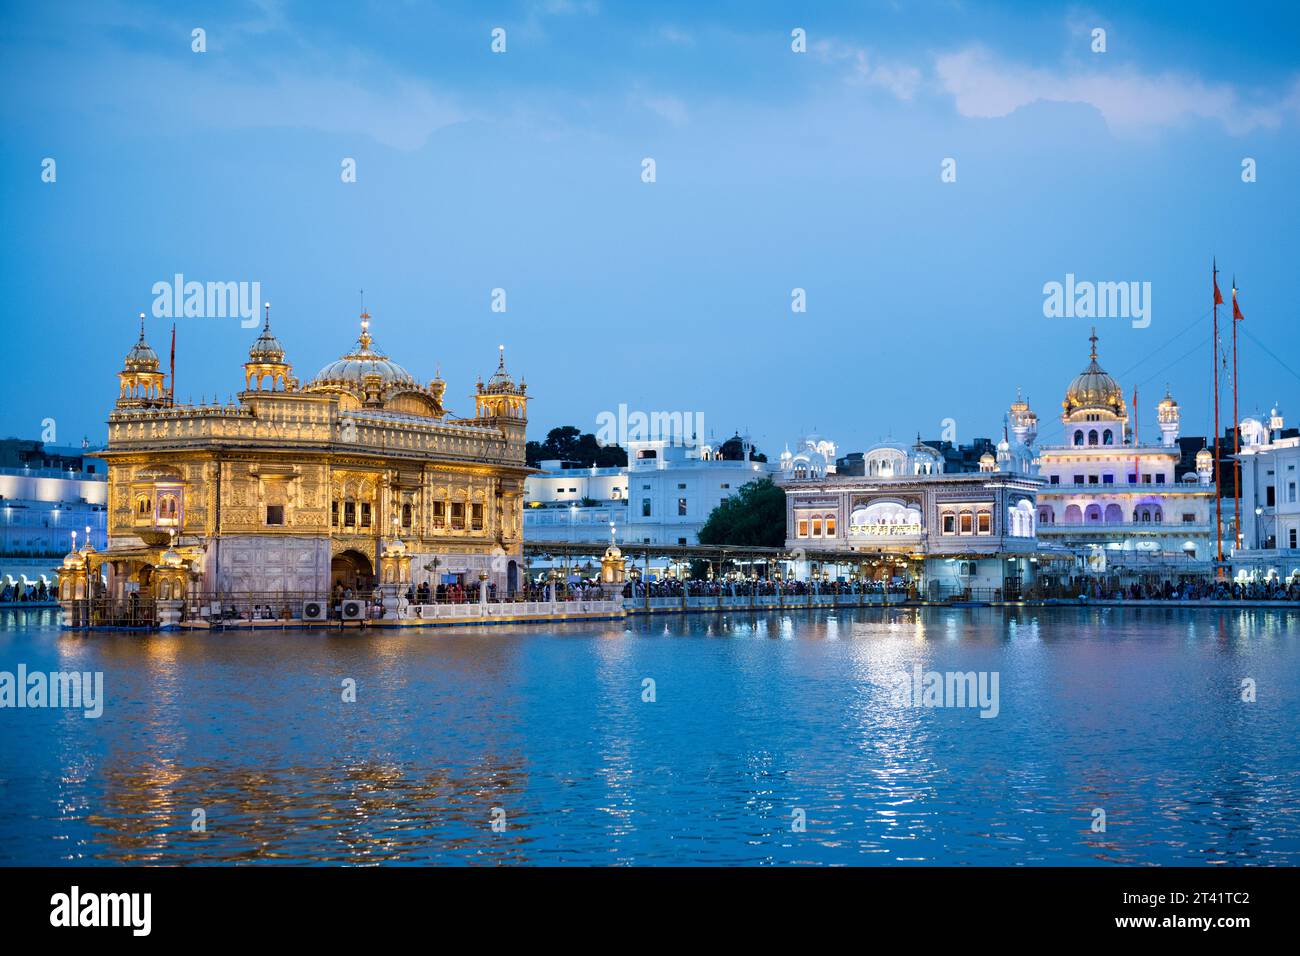 Le Temple d'Or, Golden Temple Rd, Atta Mandi, Katra Ahluwalia, Amritsar, Amritsar Cantt., Punjab, Inde Banque D'Images